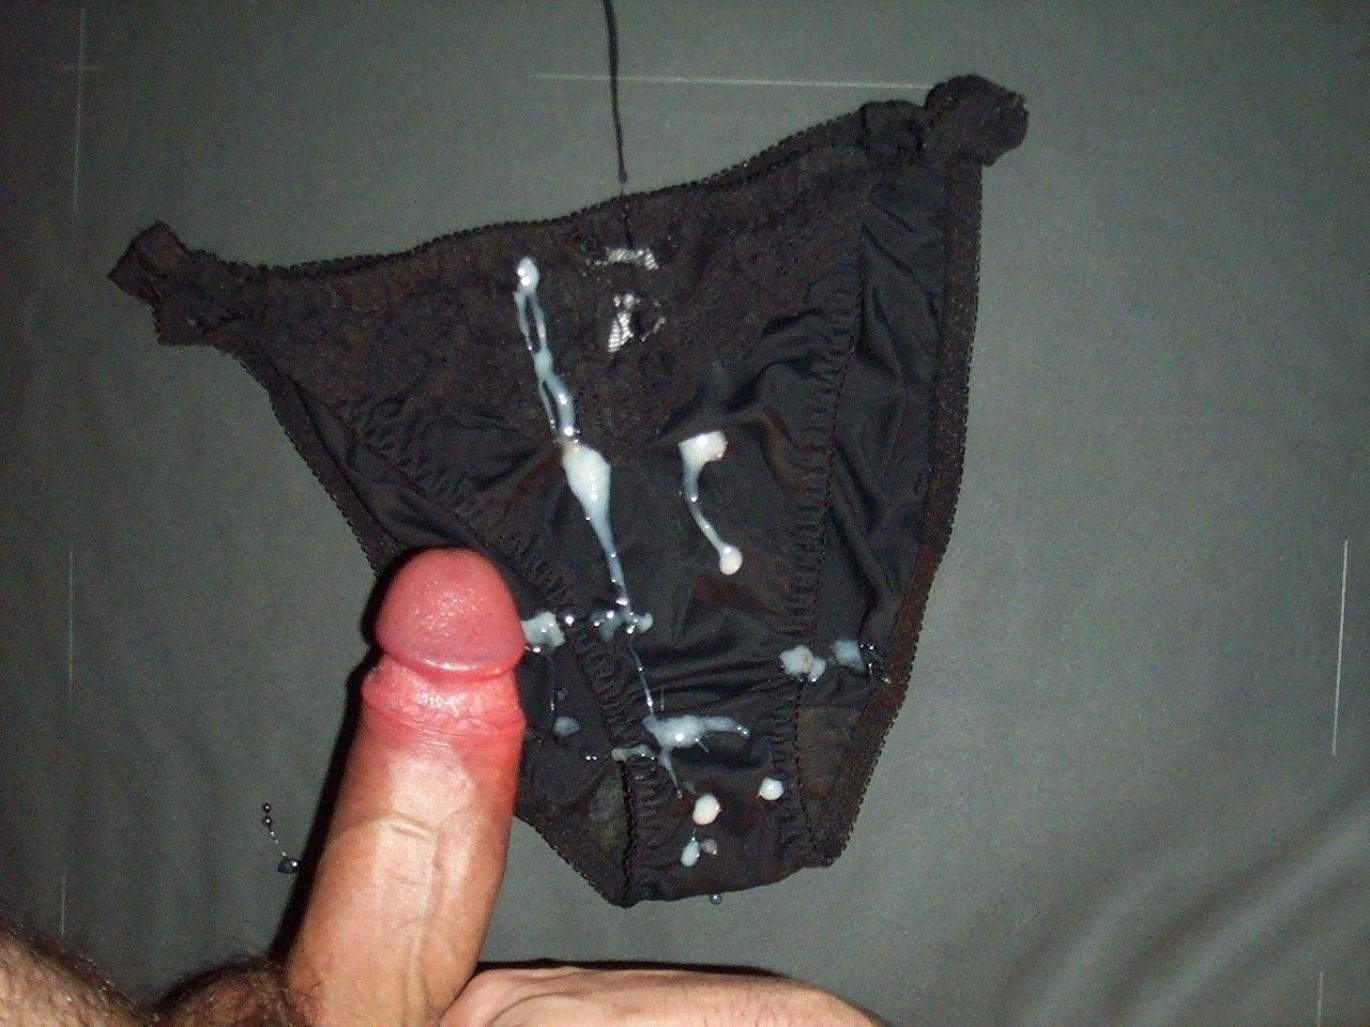 SPERM in Black Underpants (75 photos)